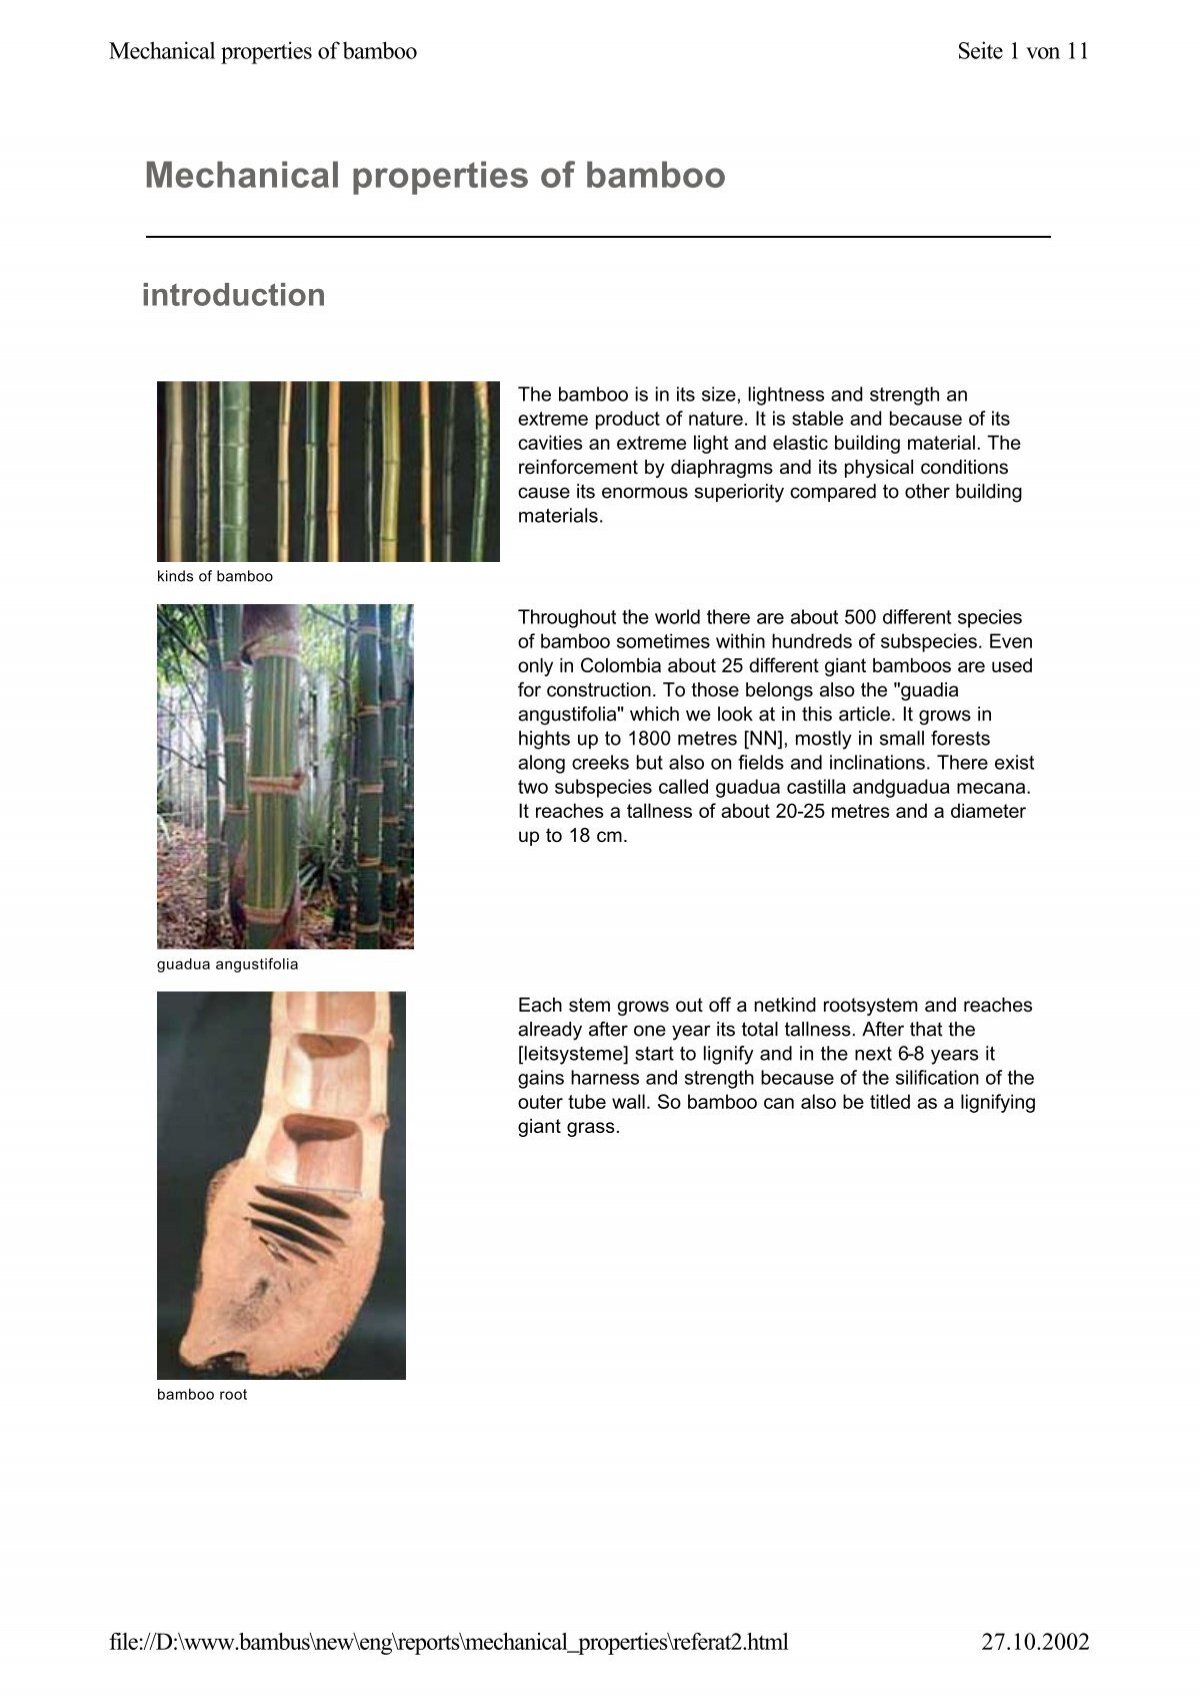 Mechanical Properties Of Bamboo